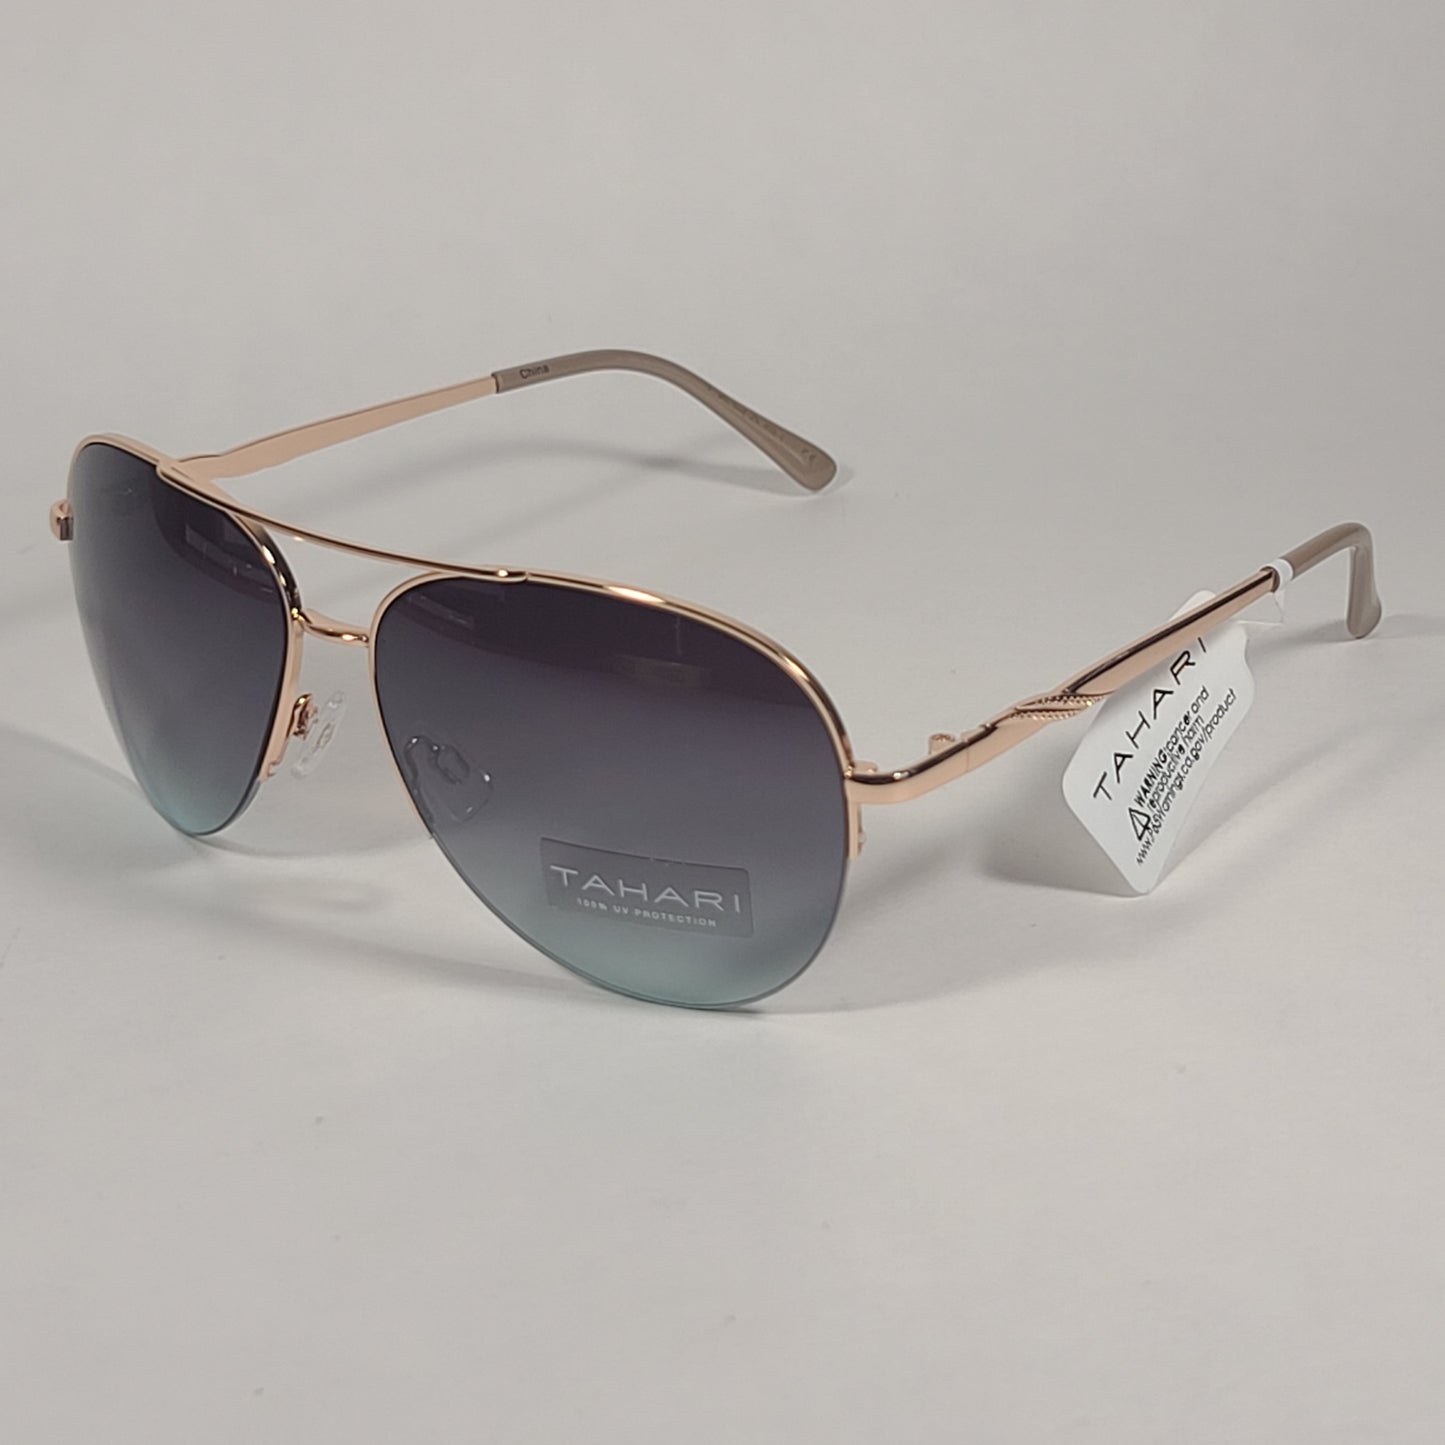 Tahari Semi Rimless Aviator Sunglasses Gold Frame Gray Green Gradient Lens TH792 GLDND - Sunglasses